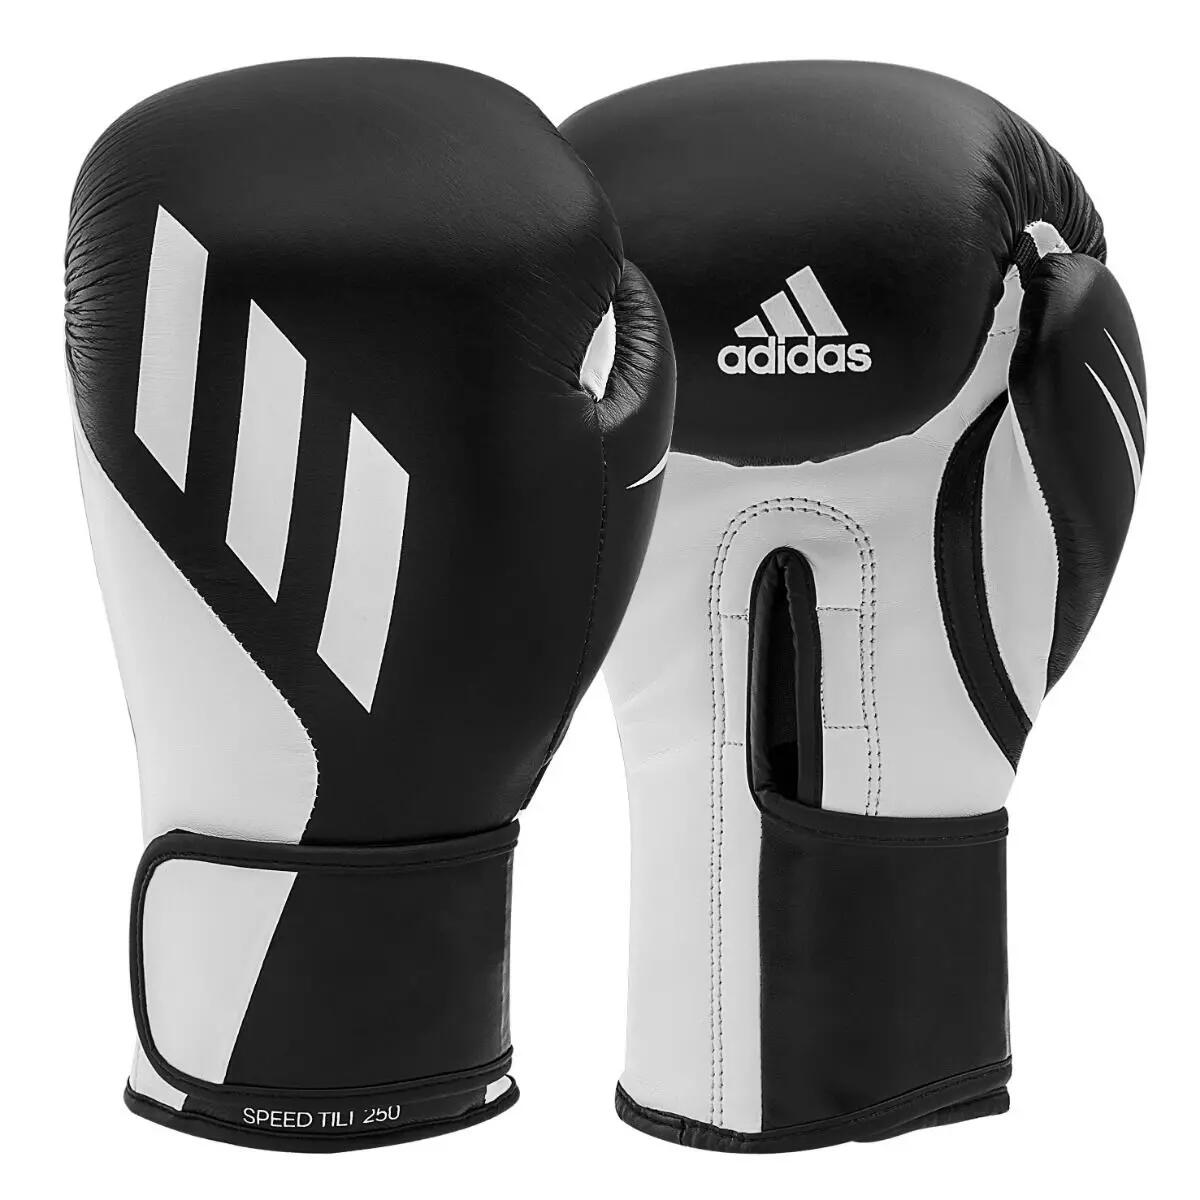 ADIDAS Adidas Speed Tilt 250 Boxing Gloves